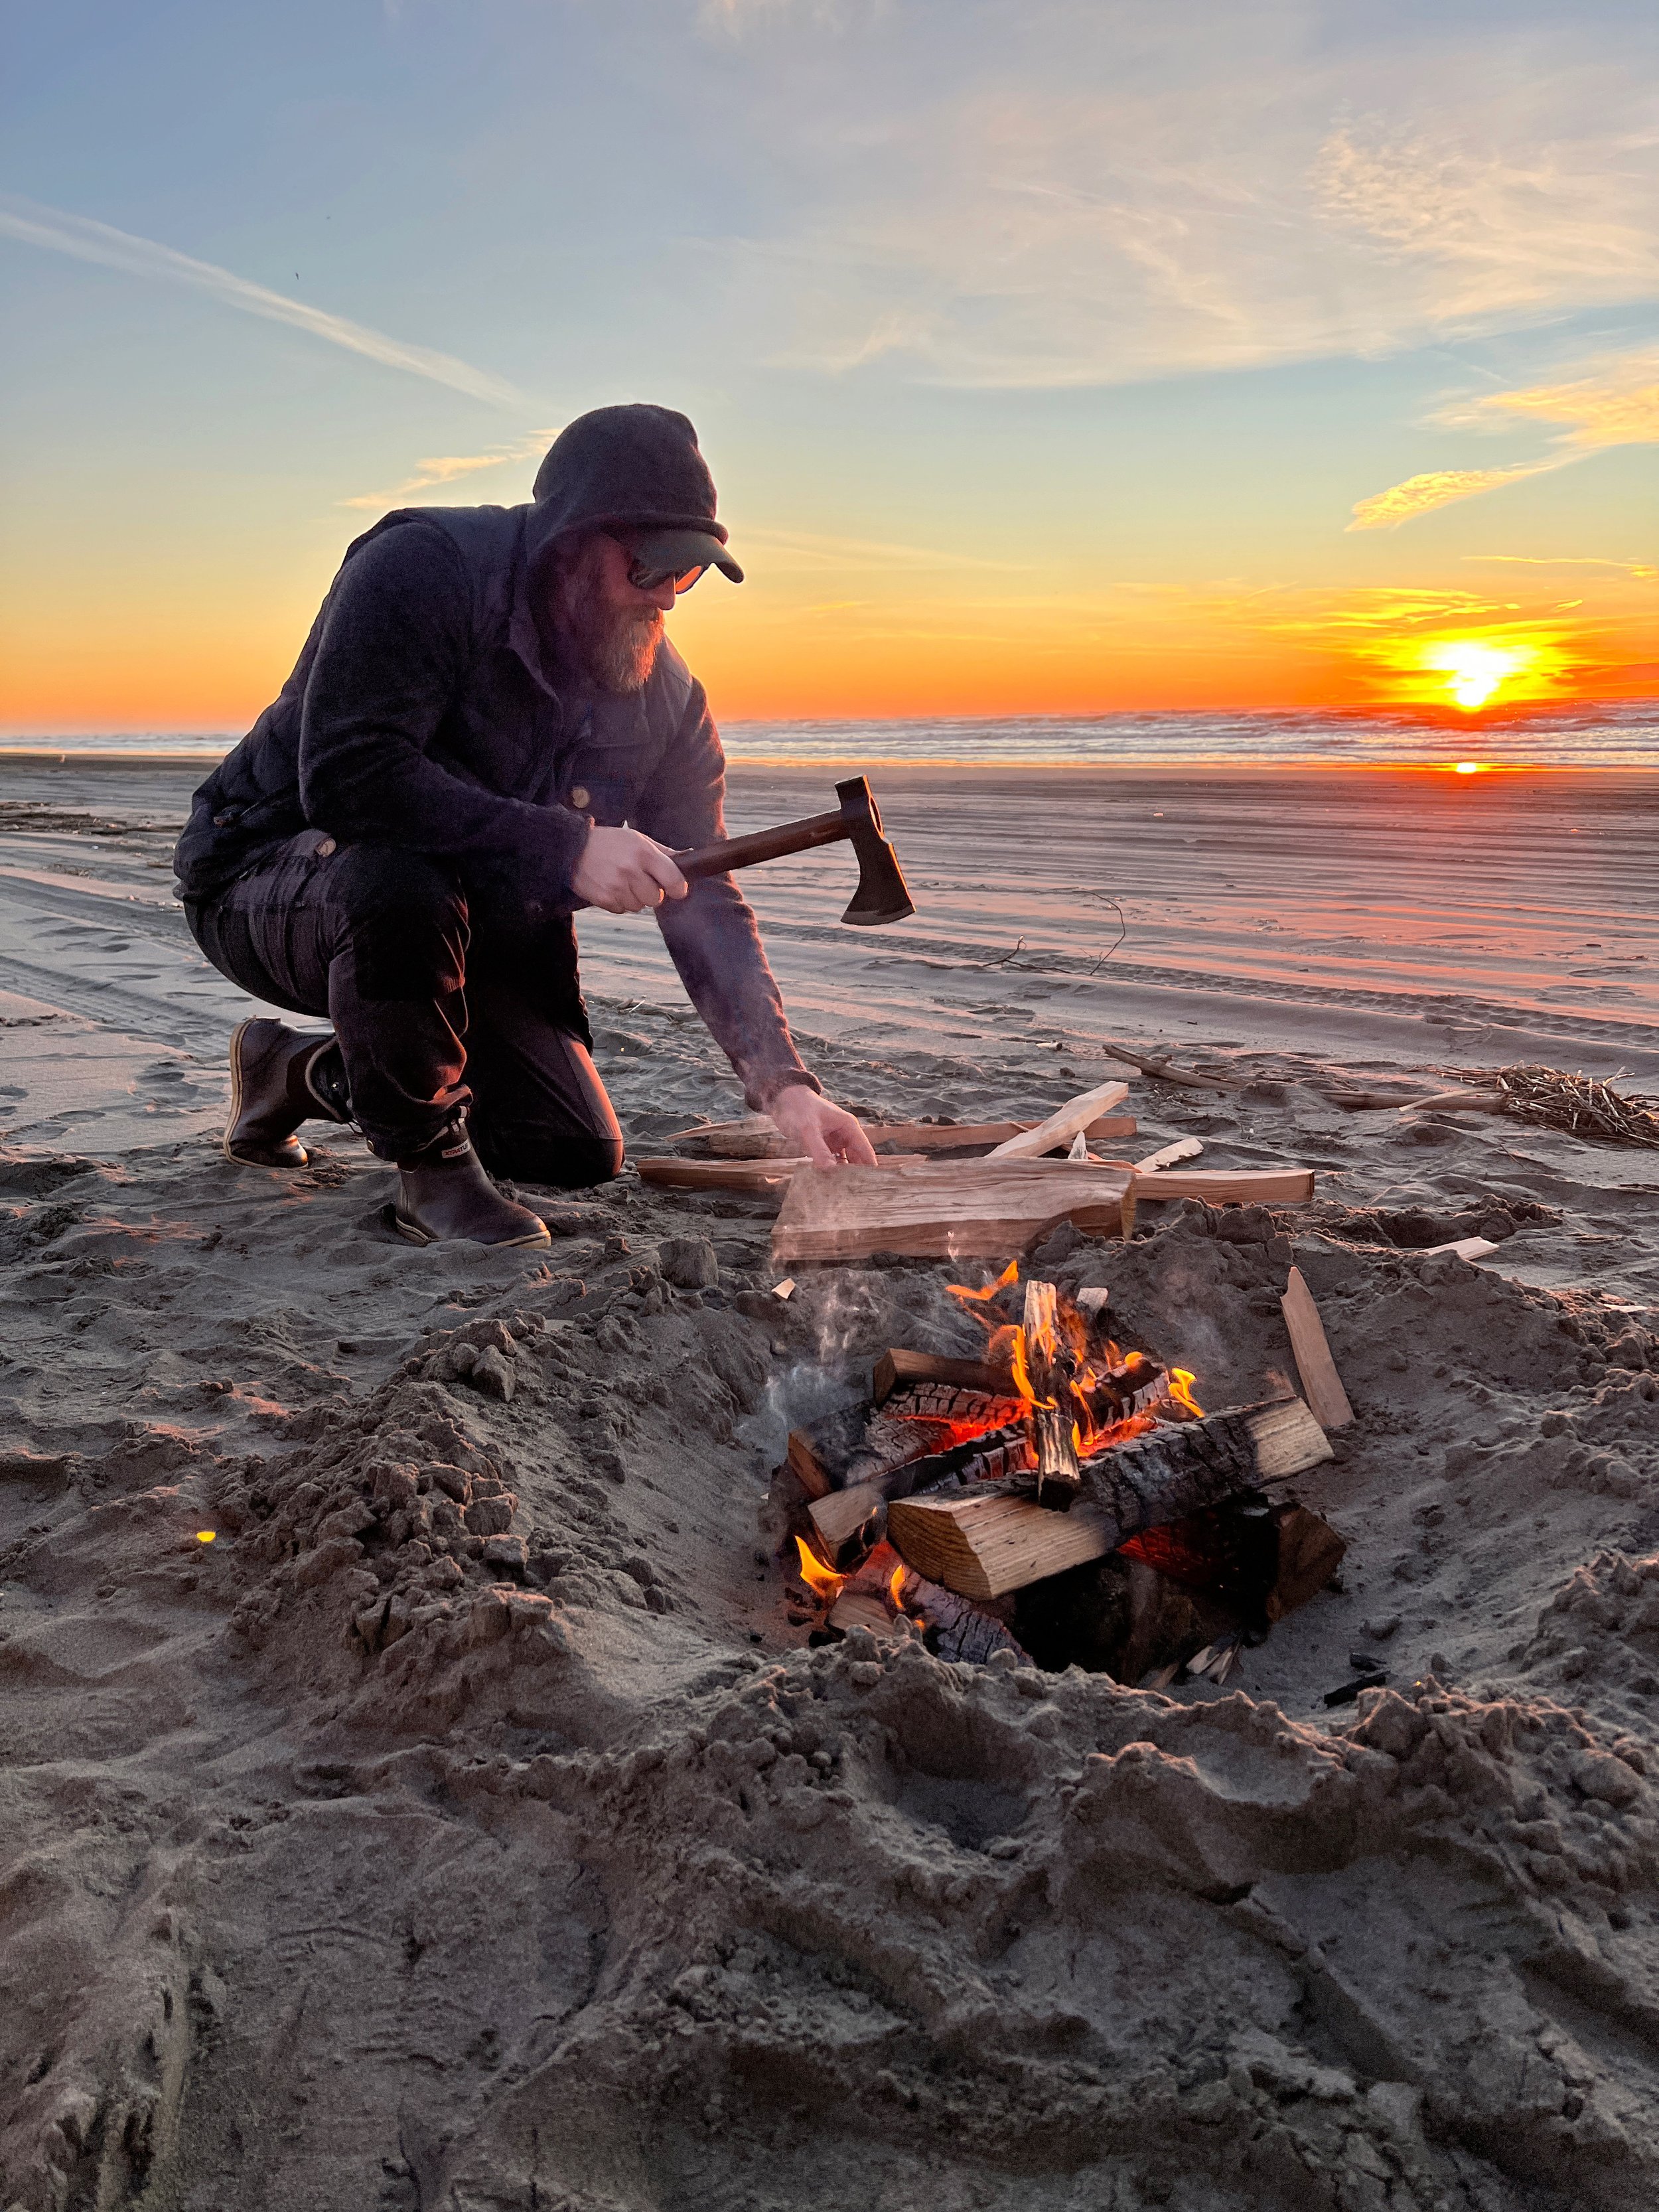 Barebones Living hatchet on the Washington Coast beach campfire at sunset